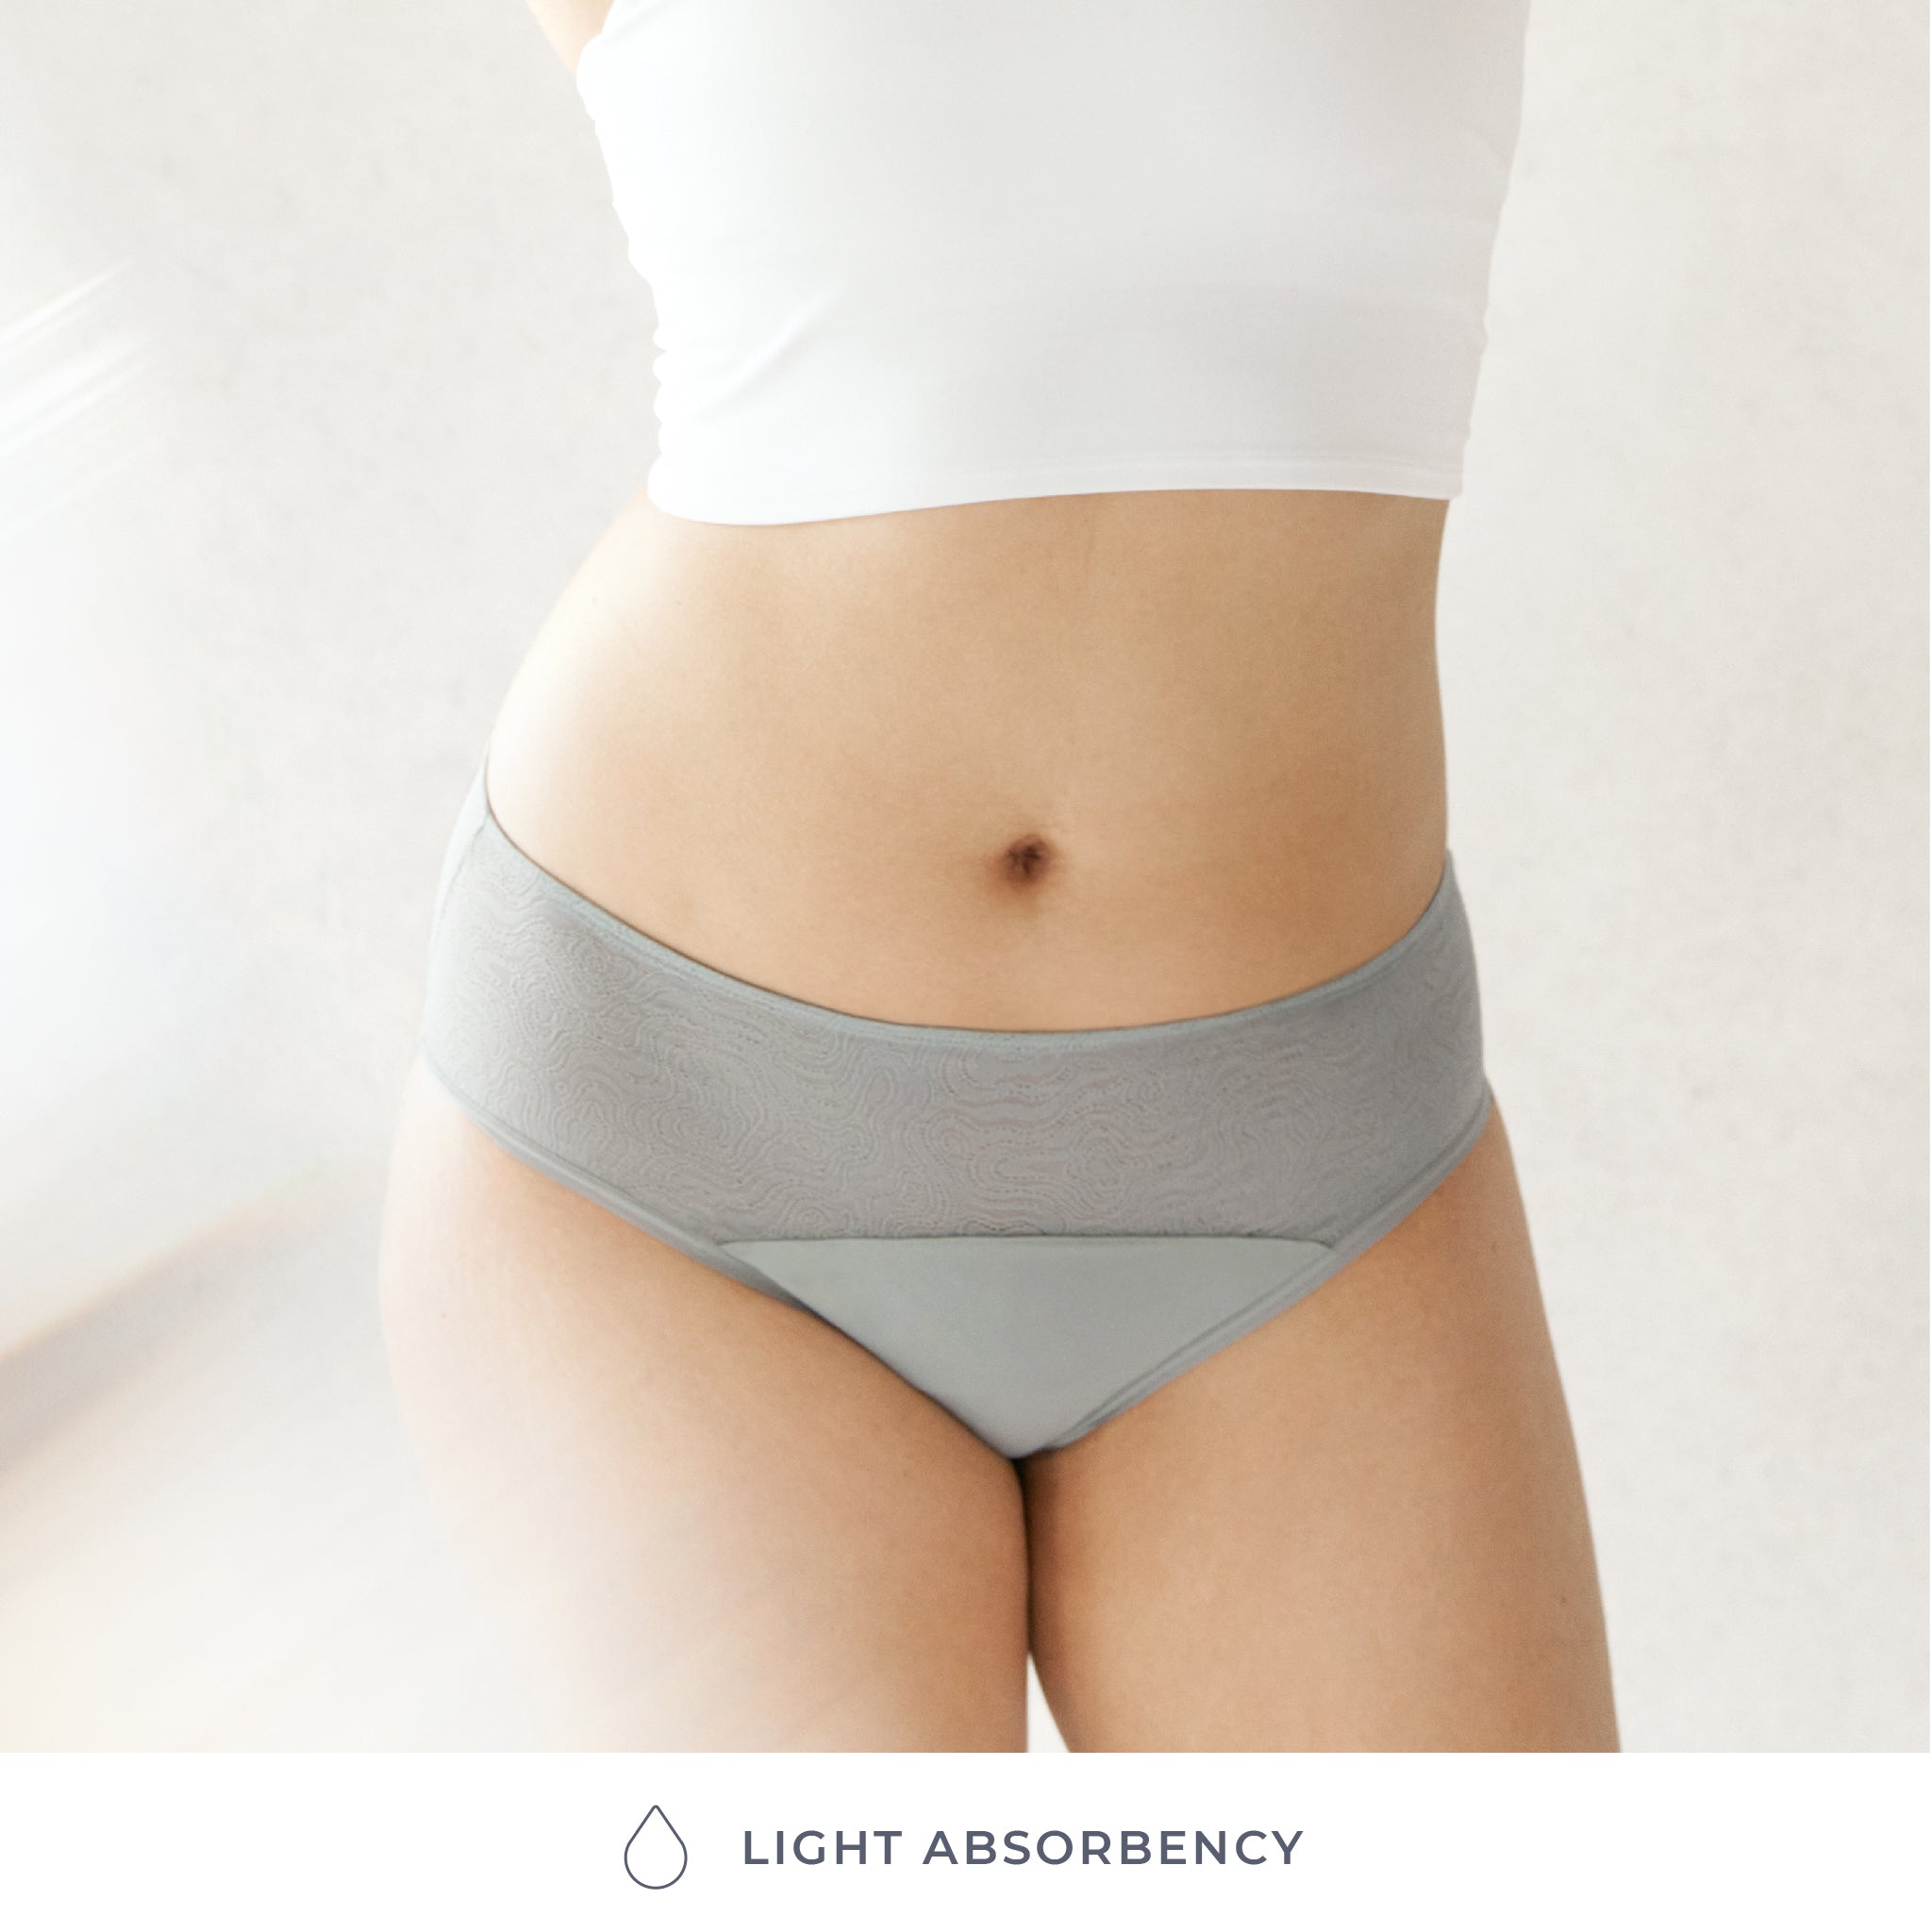 Leak Proof Lace Hipster | Period Underwear | Saalt